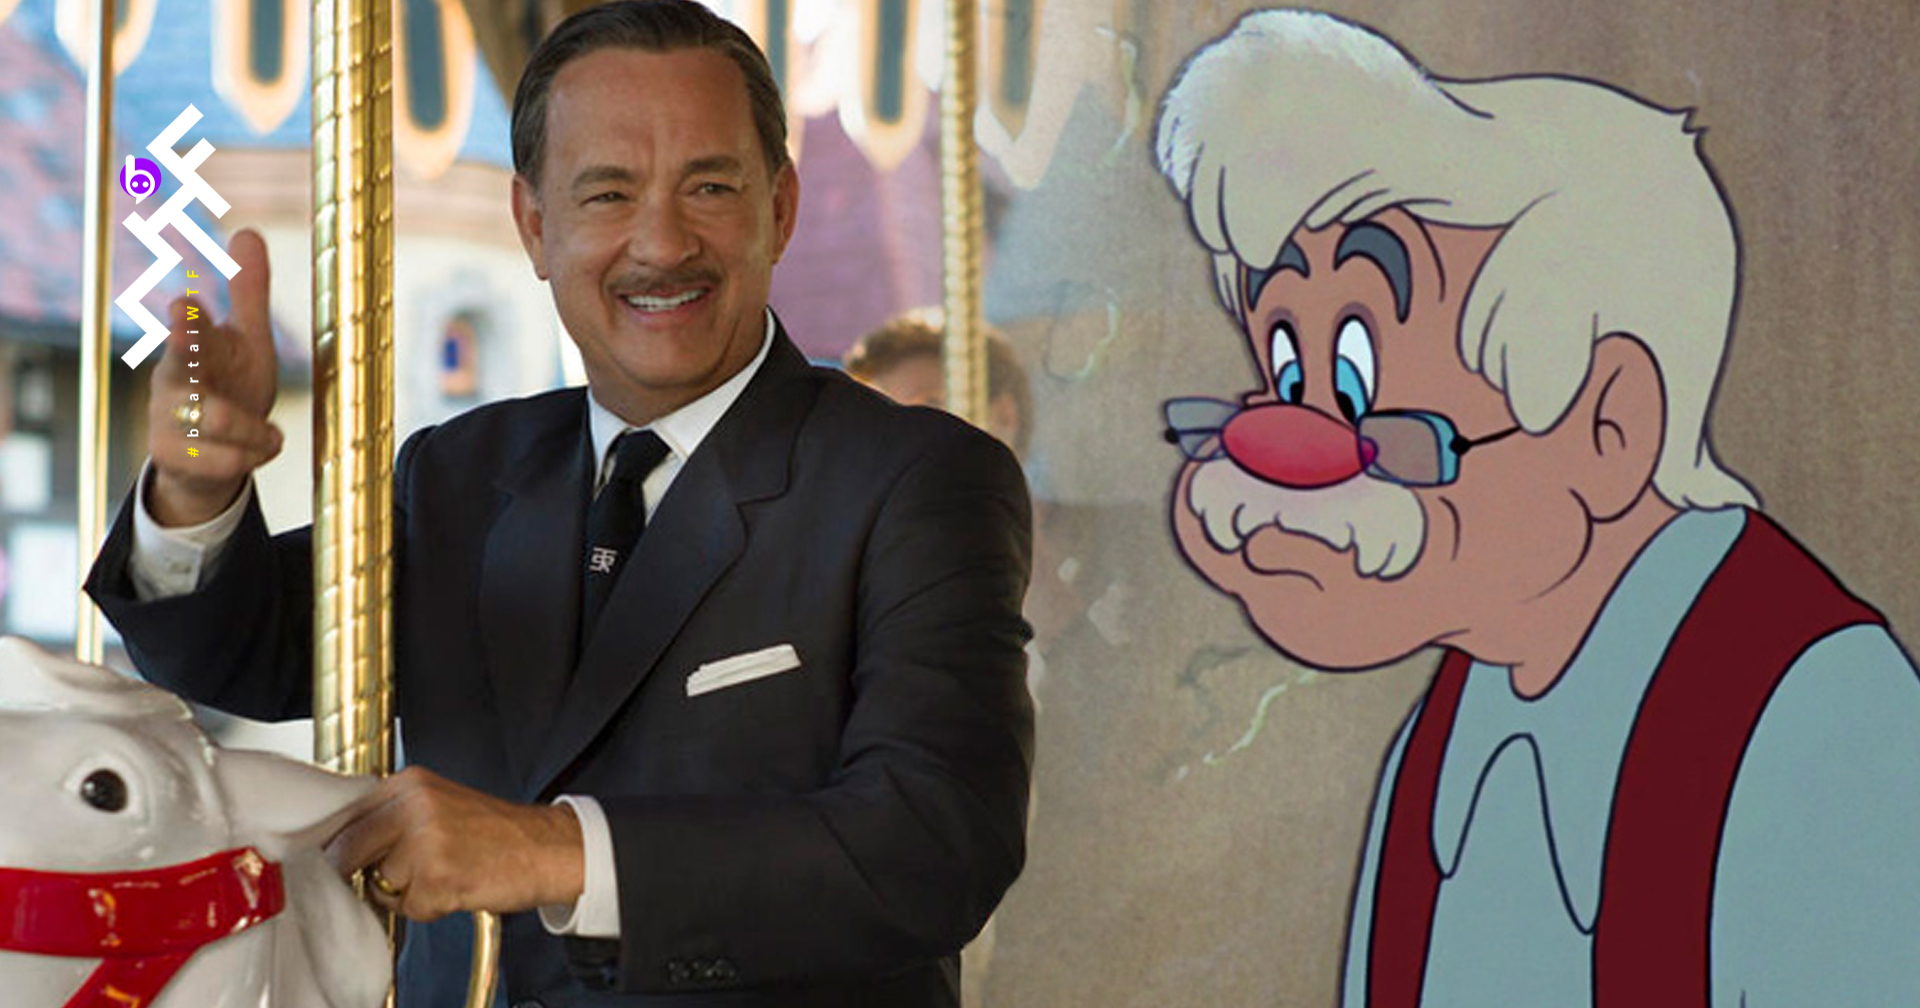 Tom Hanks เจรจารับบท "ลุงช่างไม้" เจ้าของ Pinocchio ในหนังของผู้กำกับ Forrest Gump